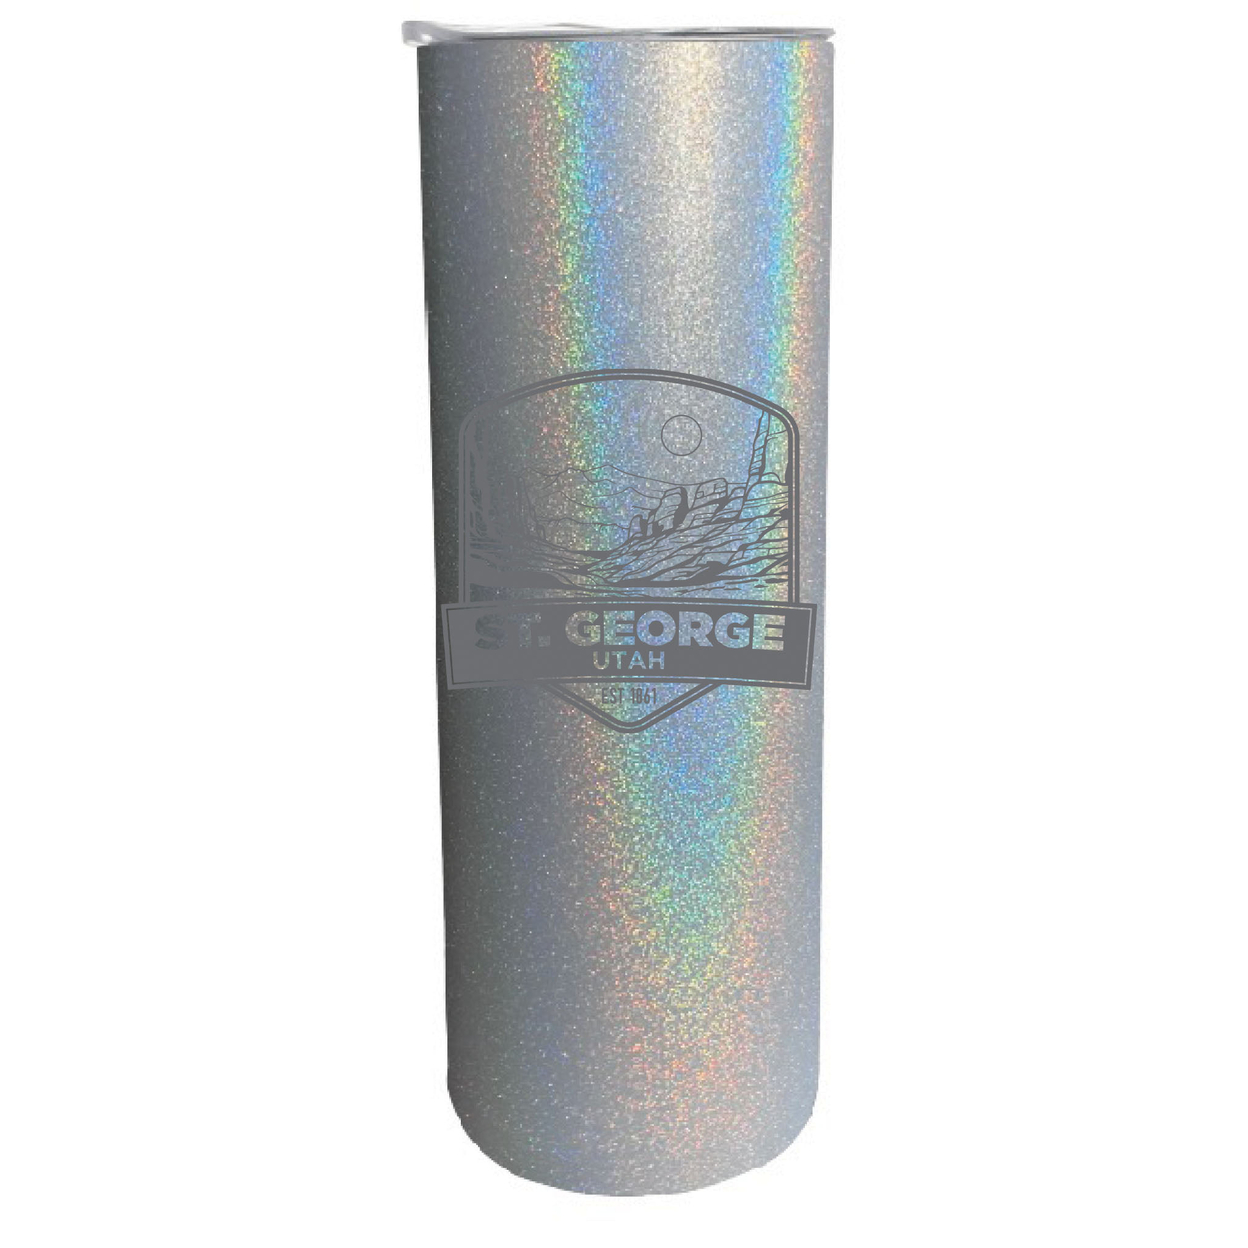 St. George Utah Souvenir 20 Oz Engraved Insulated Stainless Steel Skinny Tumbler - Gray Glitter,,2-Pack